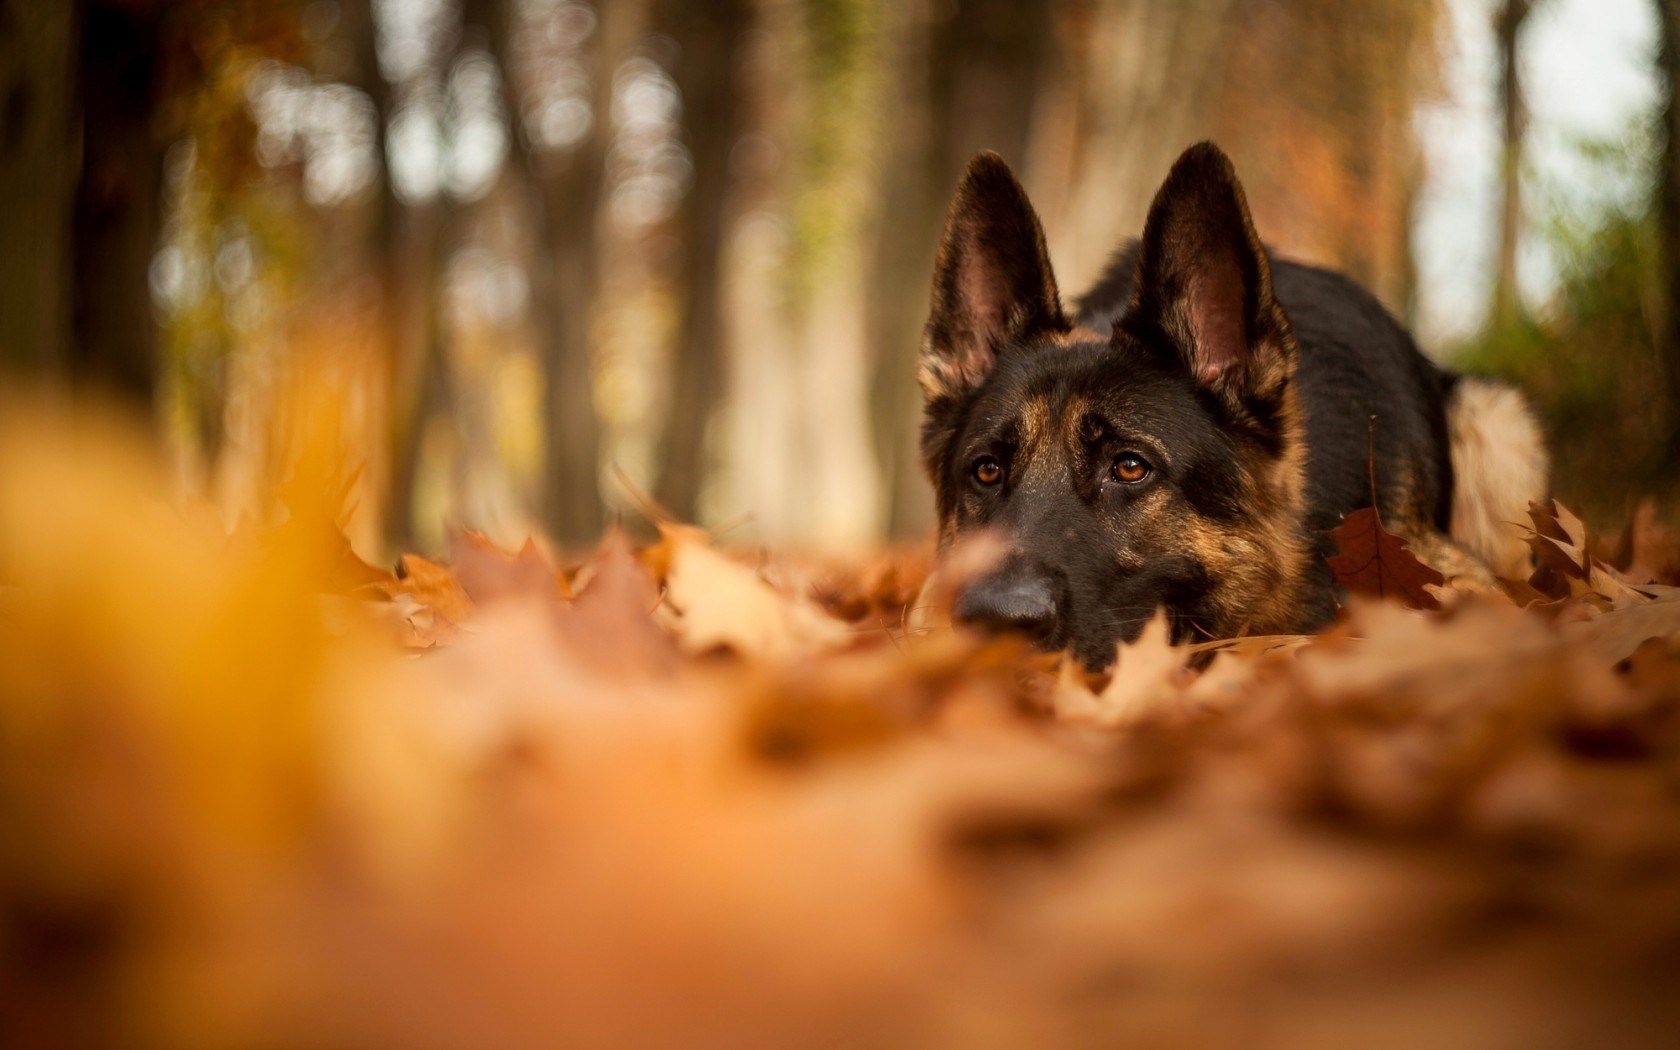 Dogs Autumn Wallpaper, High Definition, High Quality, Widescreen